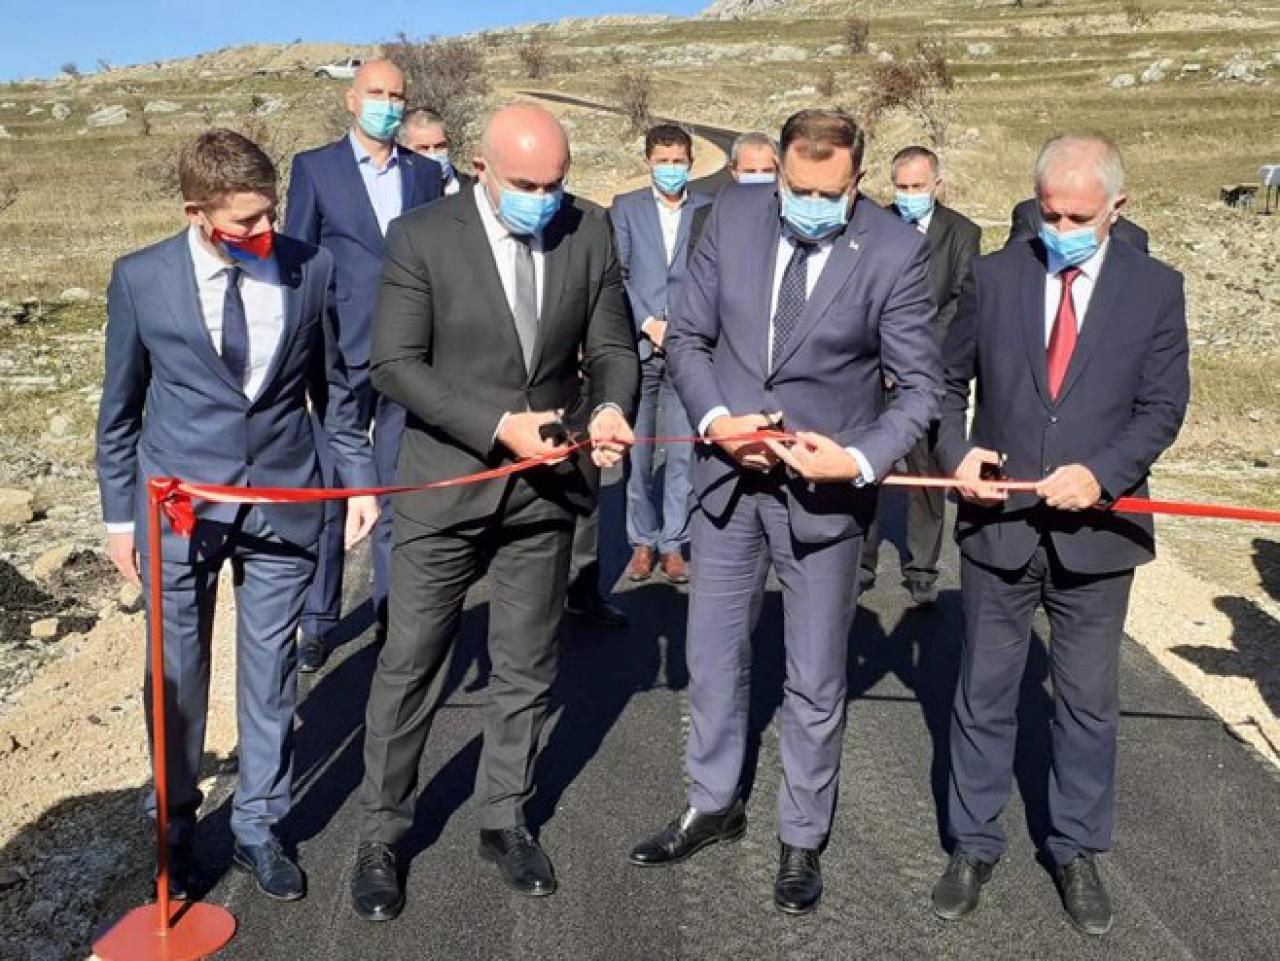 Otvaranje obnovljene ceste kraj Gacka - Dodik otvorio obnovljenu cestu kraj Gacka